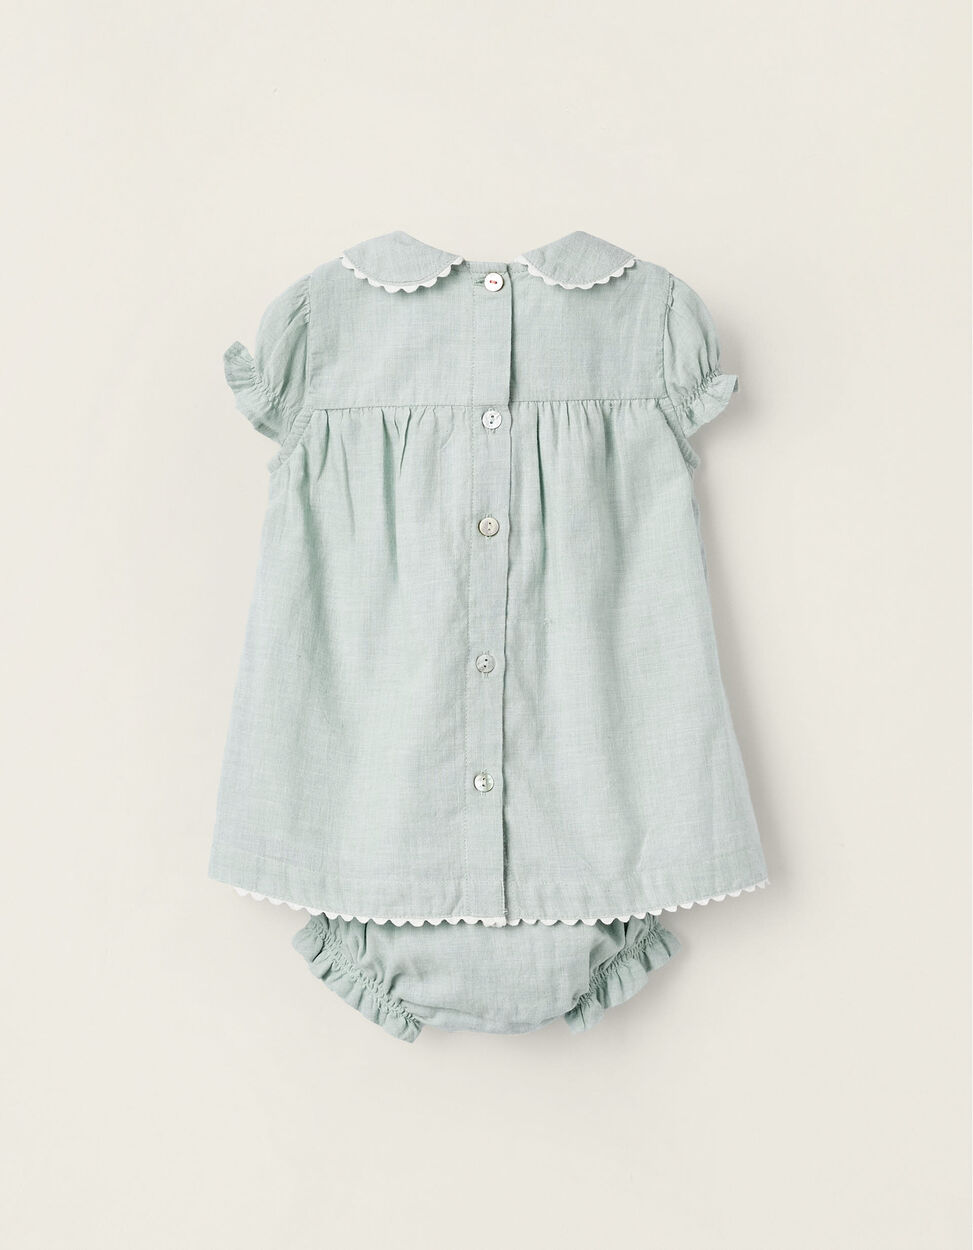 Buy Online Dress + Cotton Bloomers for Newborn Girls, Green